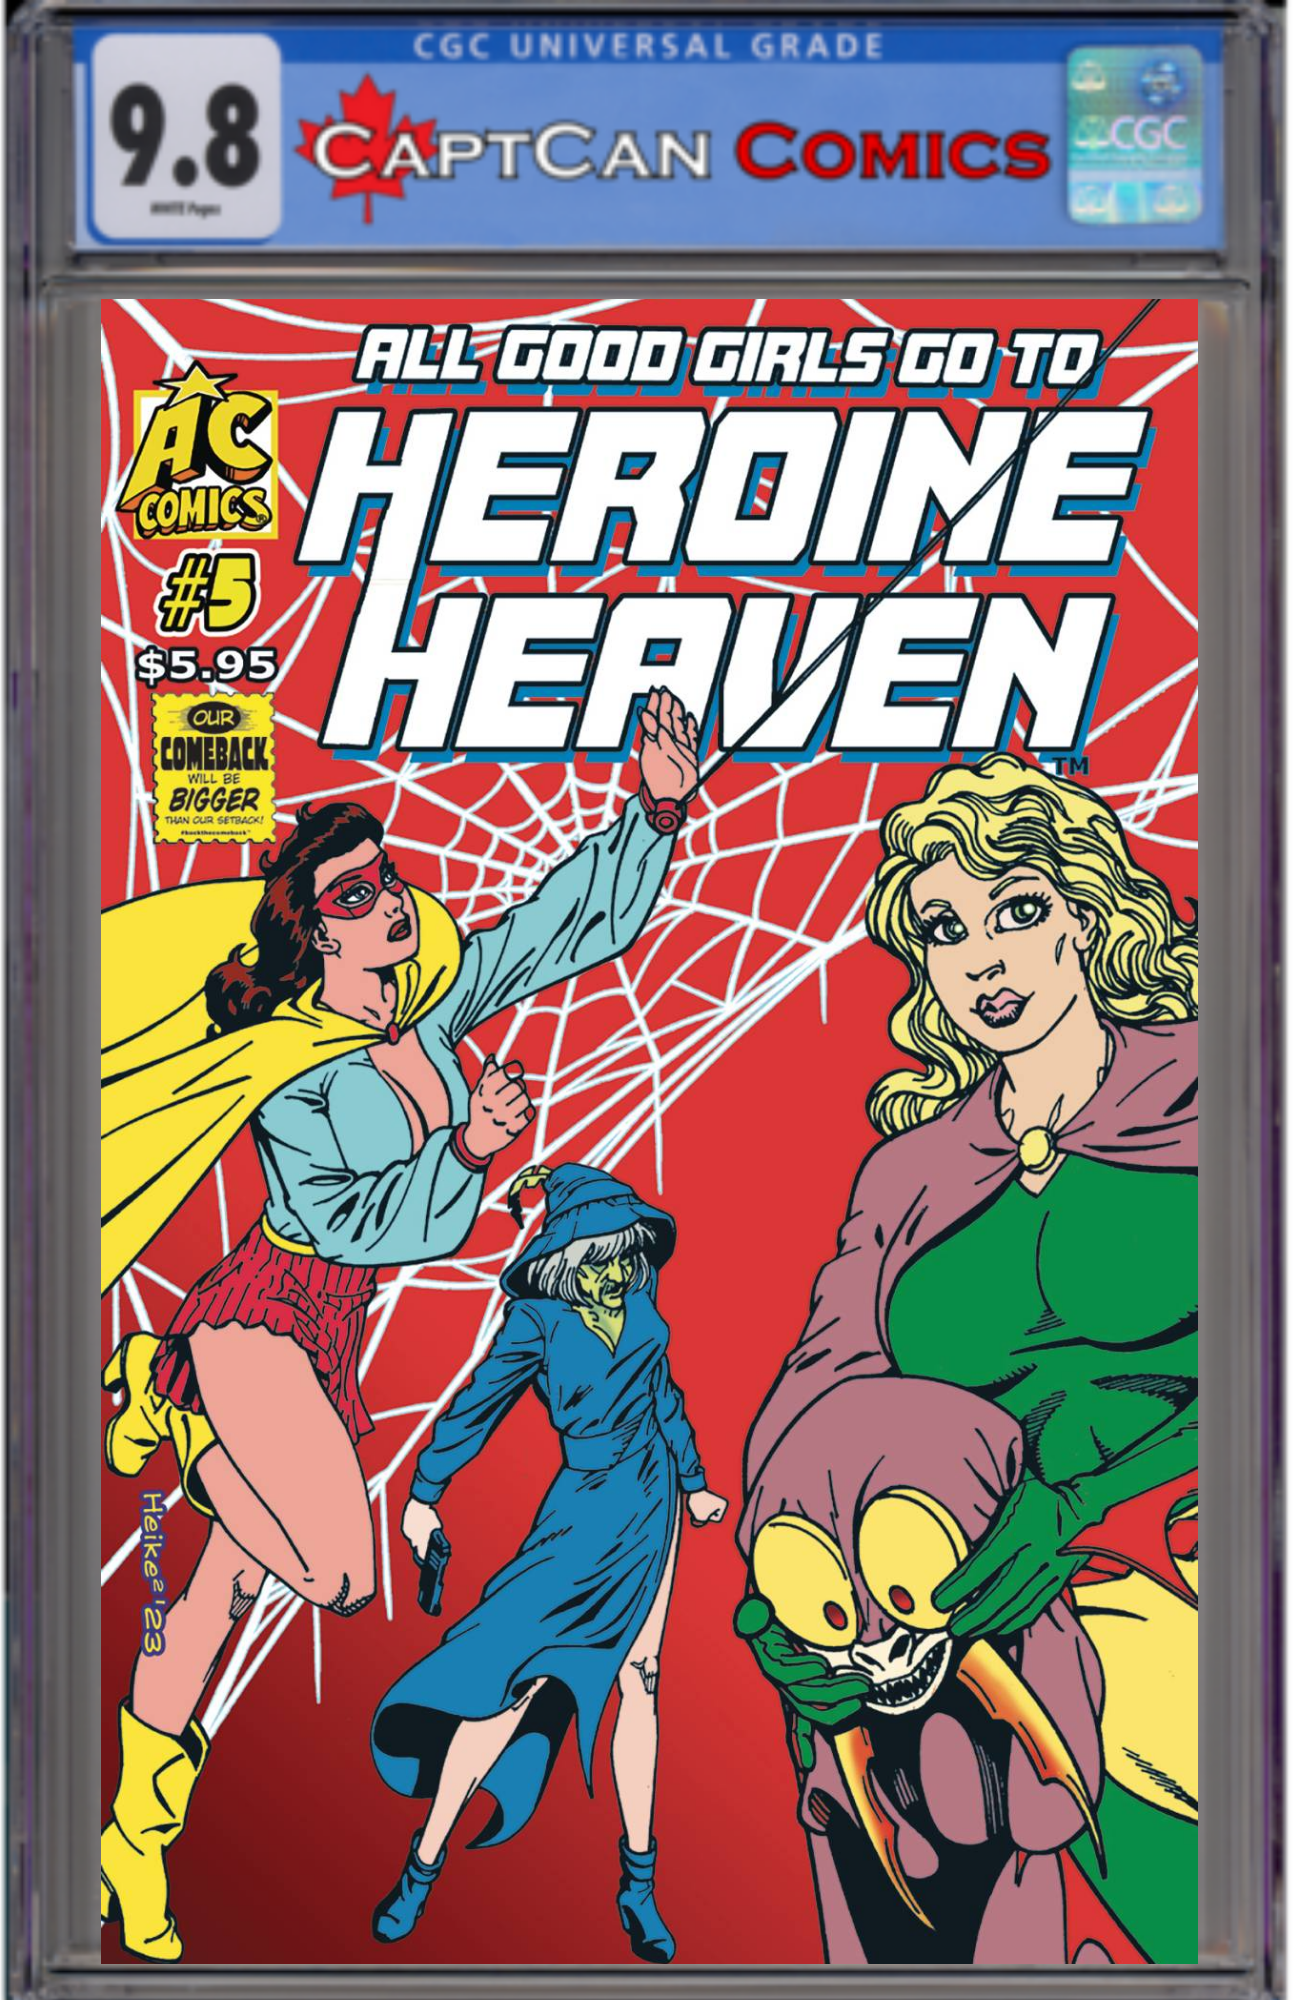 HEROINE HEAVEN #5